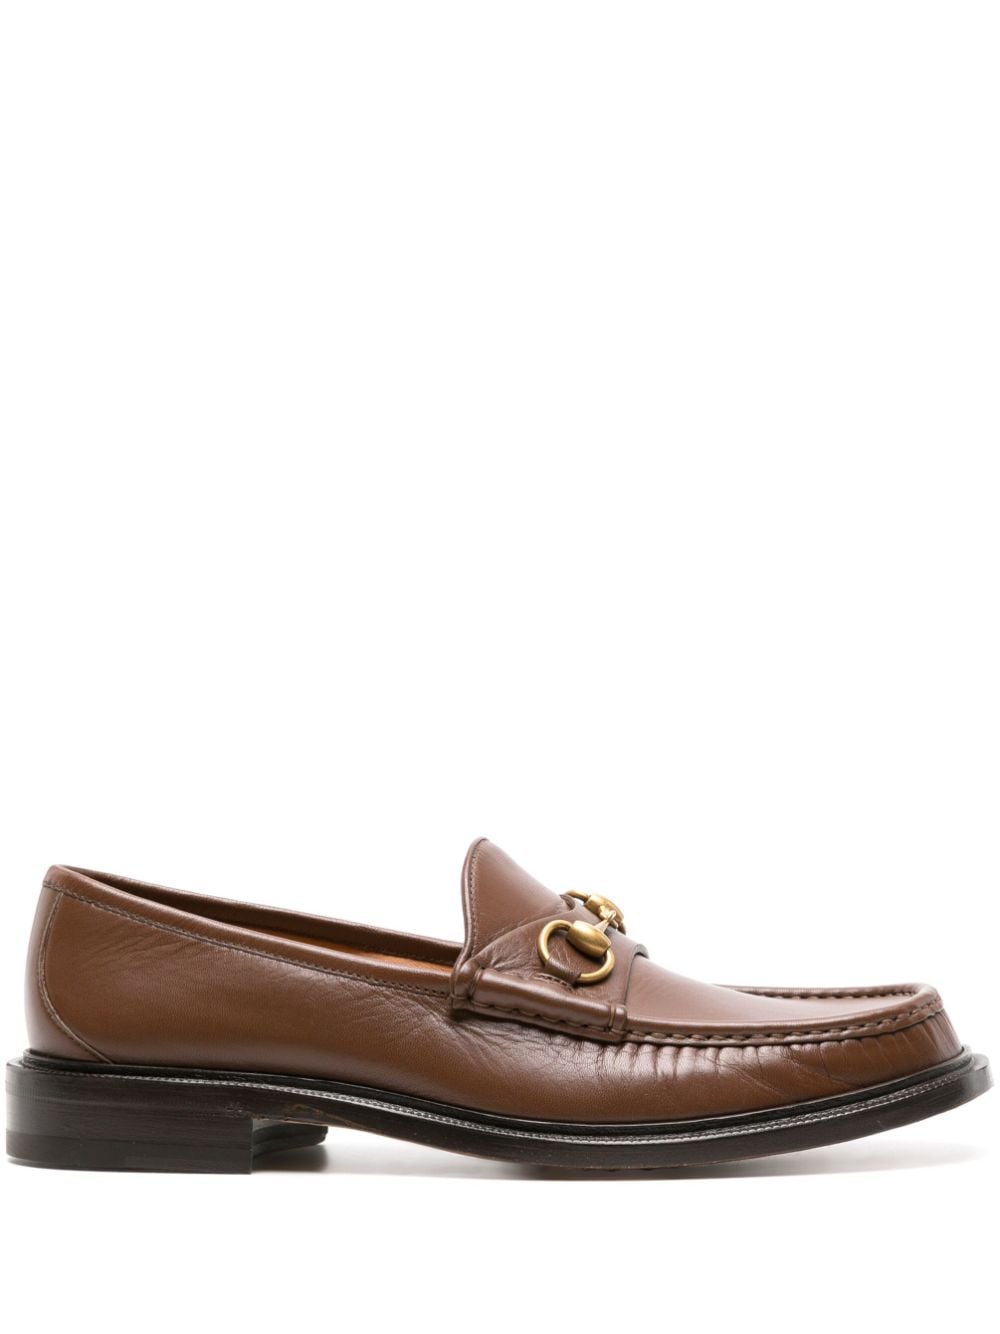 Gucci Horsebit leather loafers - Brown von Gucci